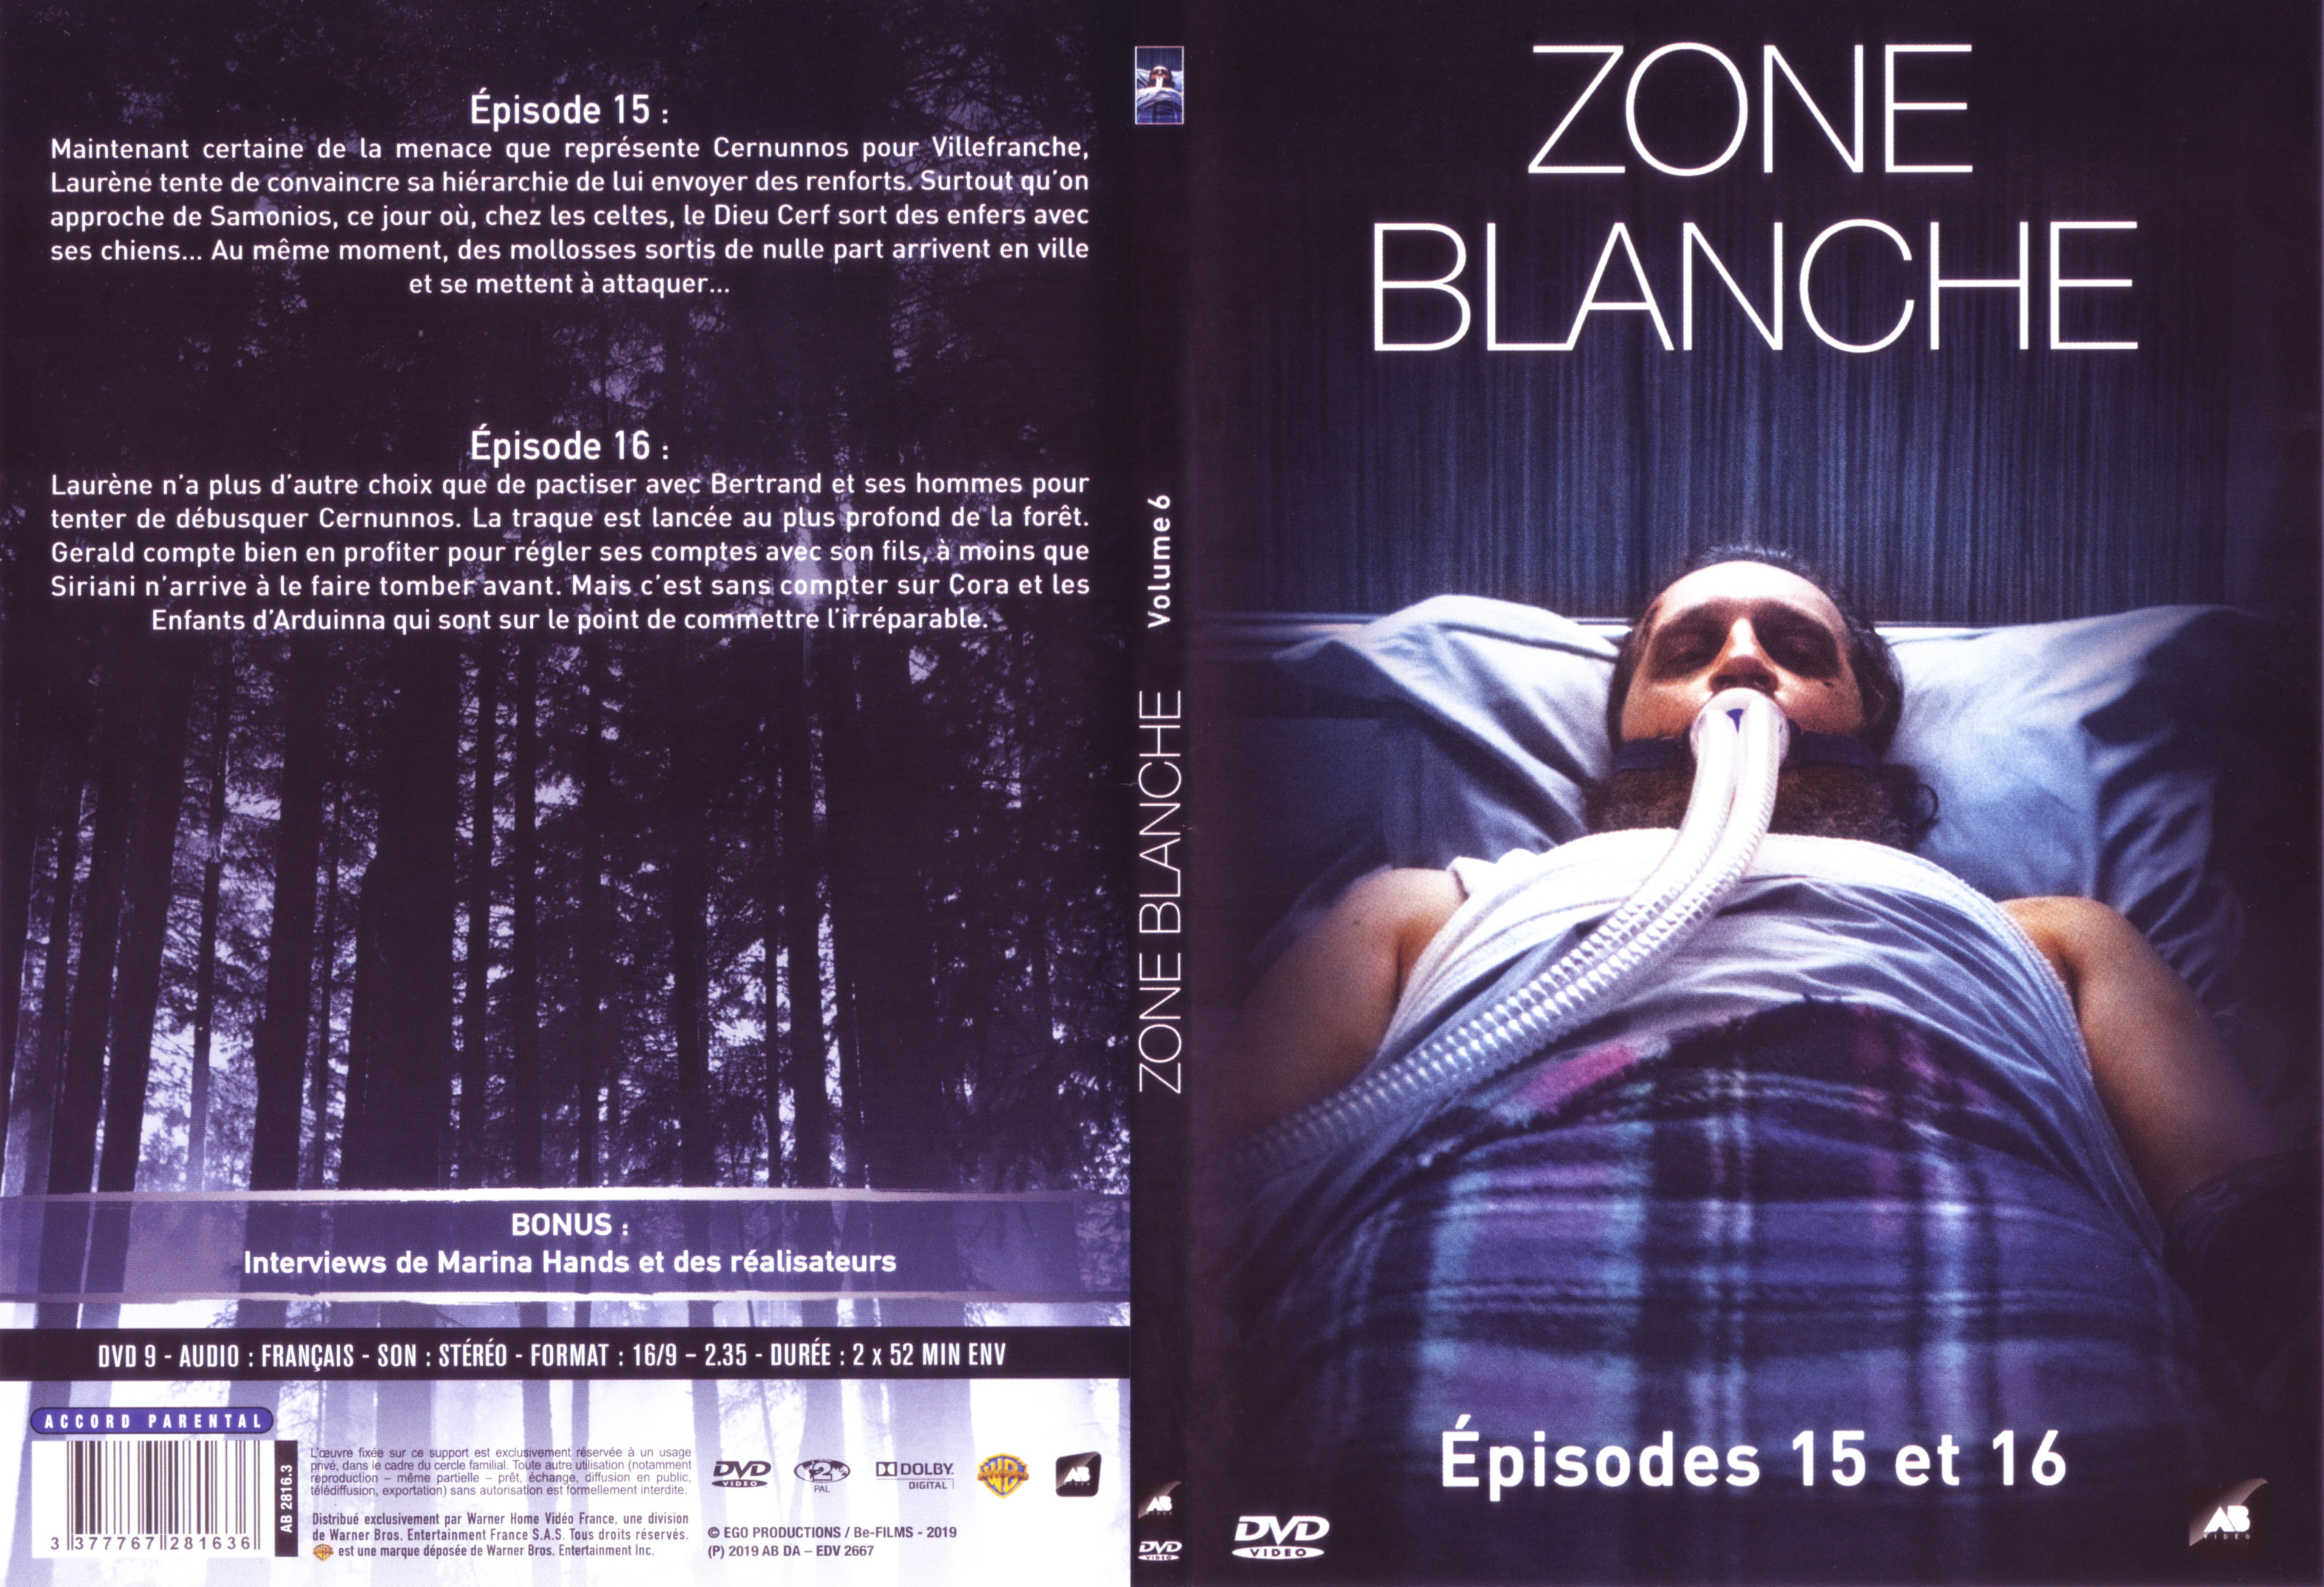 Jaquette DVD Zone blanche pisode 15-16